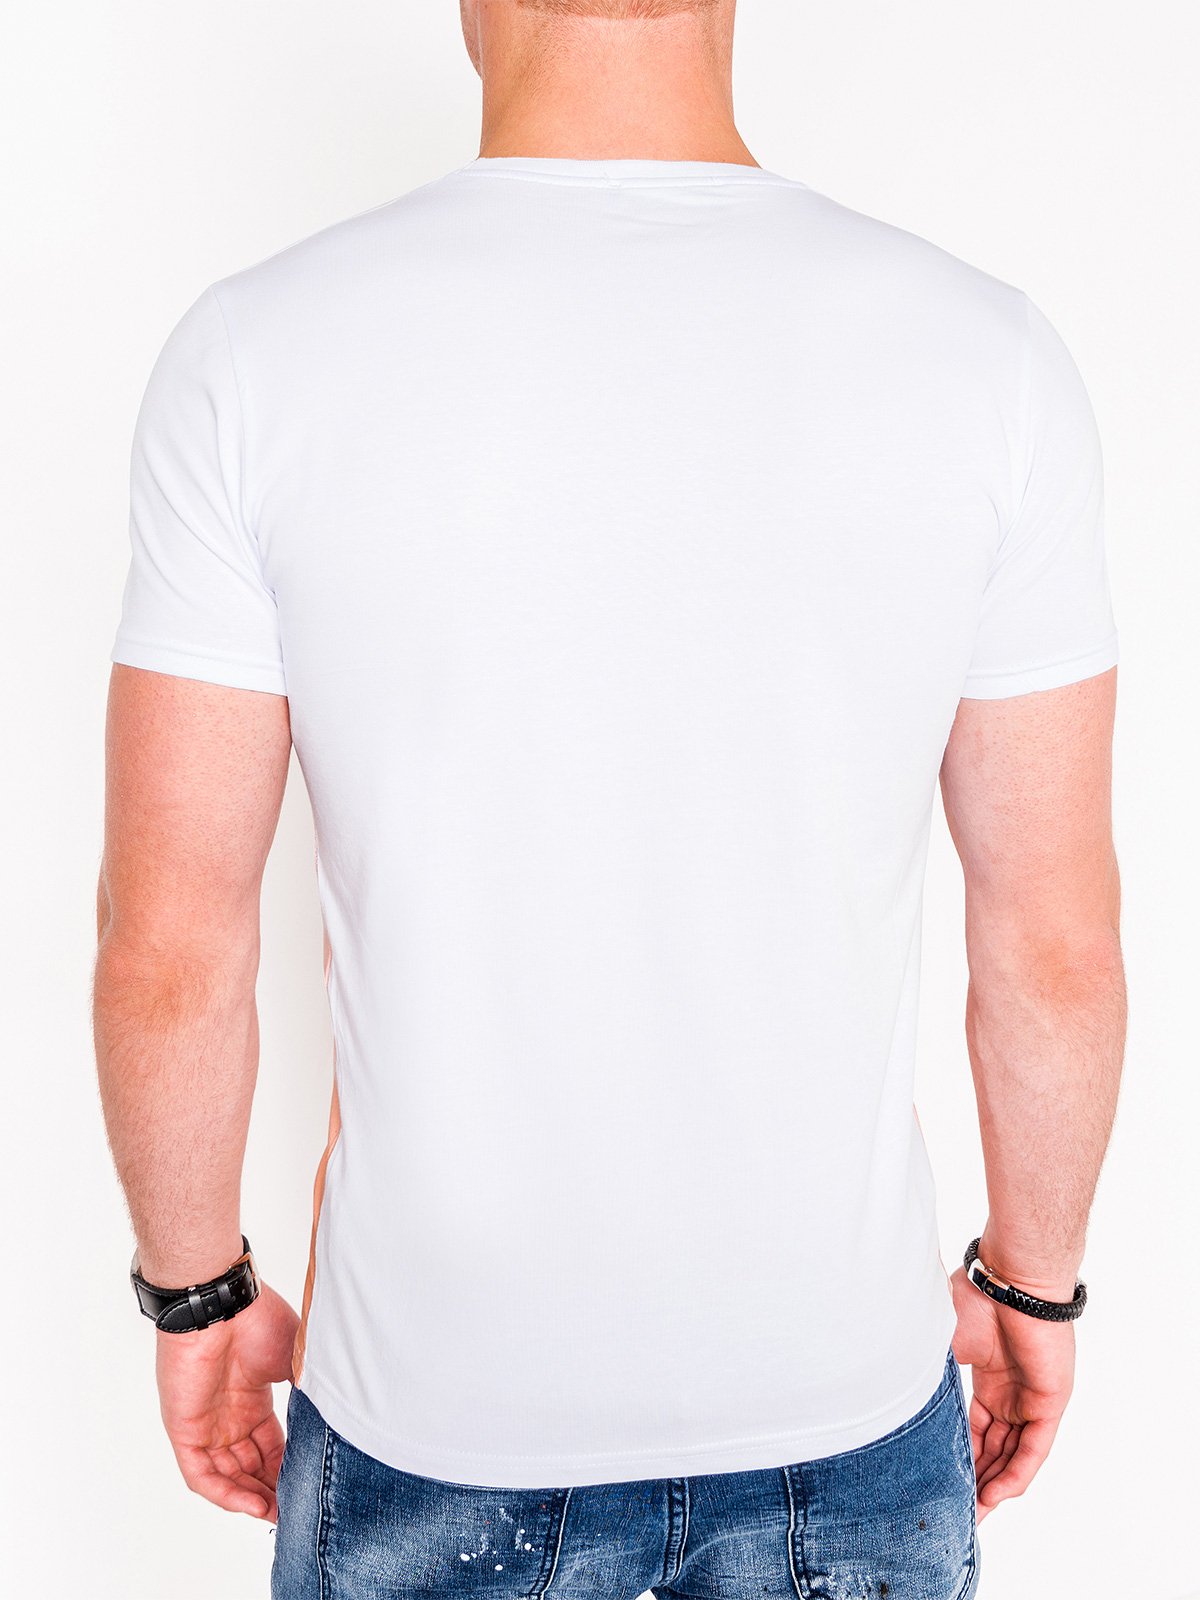 Men's plain t-shirt S427 - white/orange | MODONE wholesale - Clothing ...